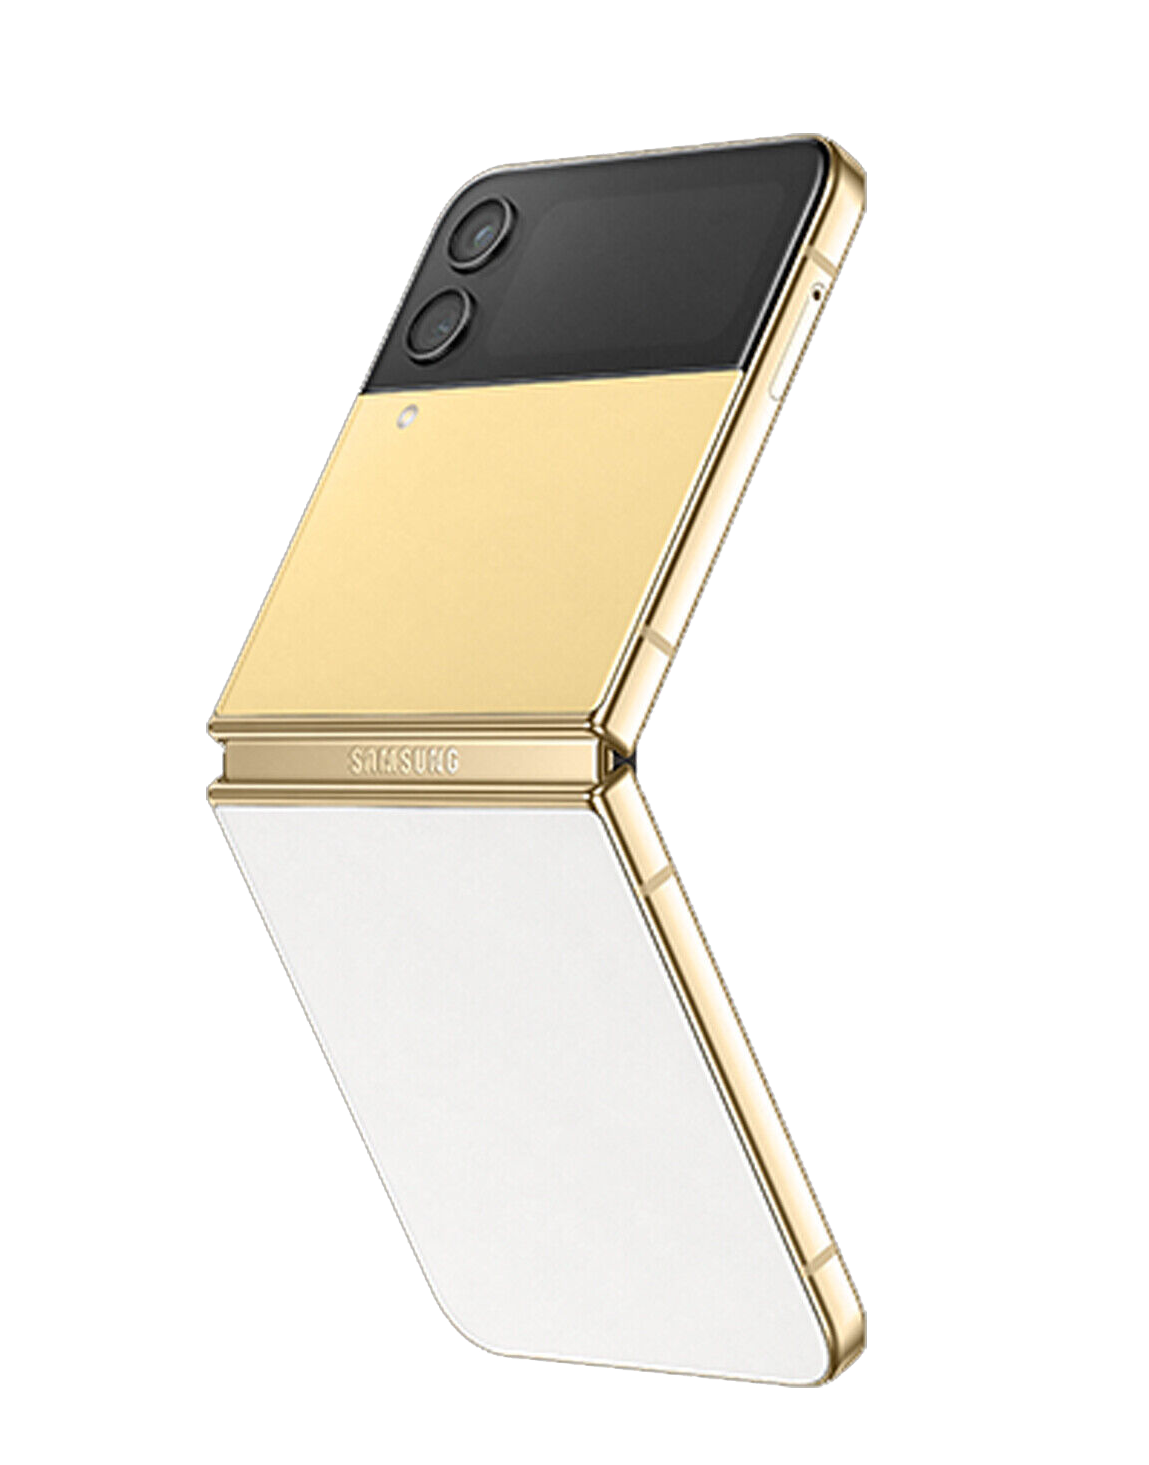 Samsung Galaxy Z Flip 4 5G Bespoke Edition gold - Ohne Vertrag